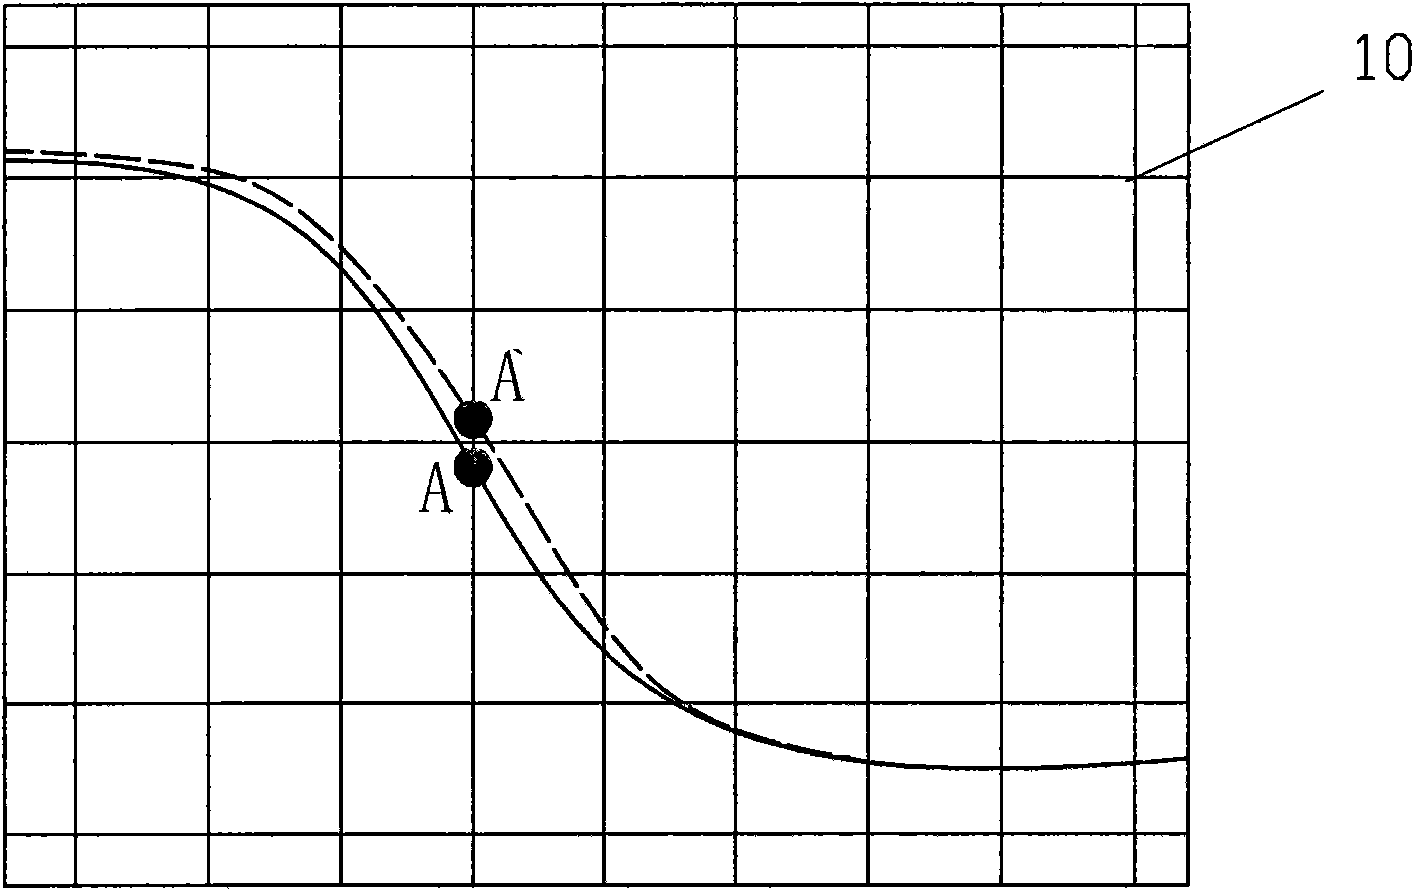 Contour line quality detection method